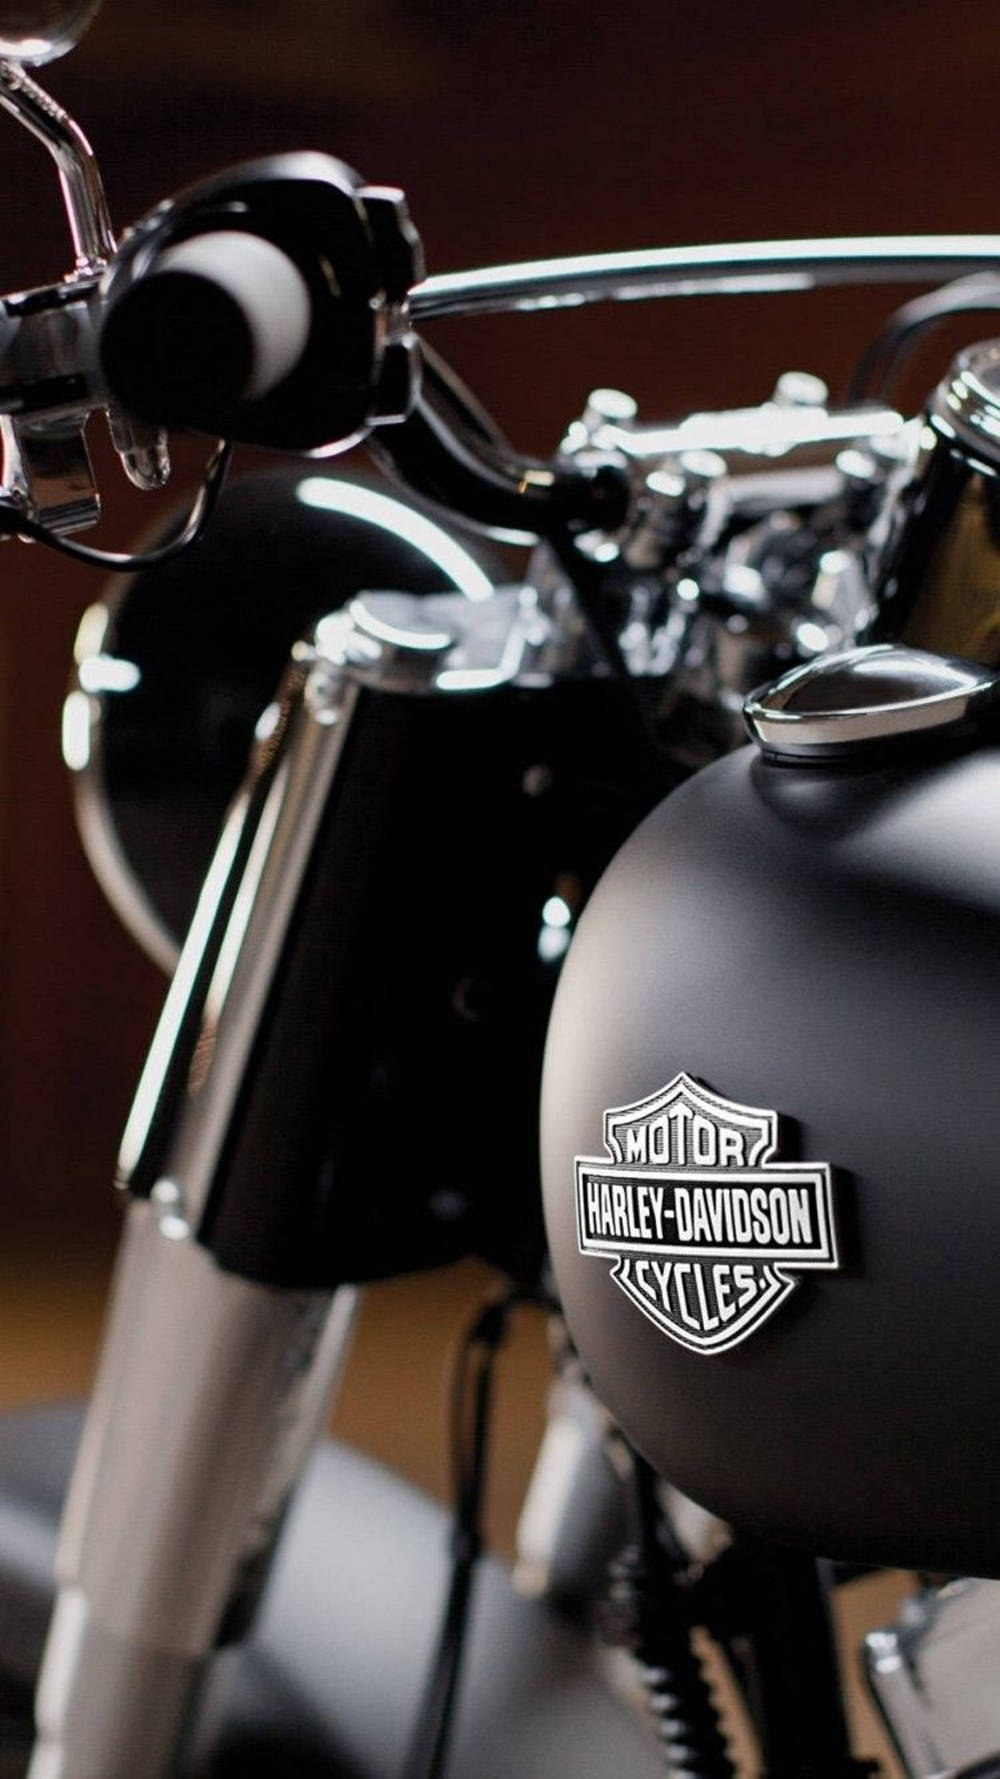 Top 999+ Harley Davidson Mobile Wallpaper Full HD, 4K✅Free to Use